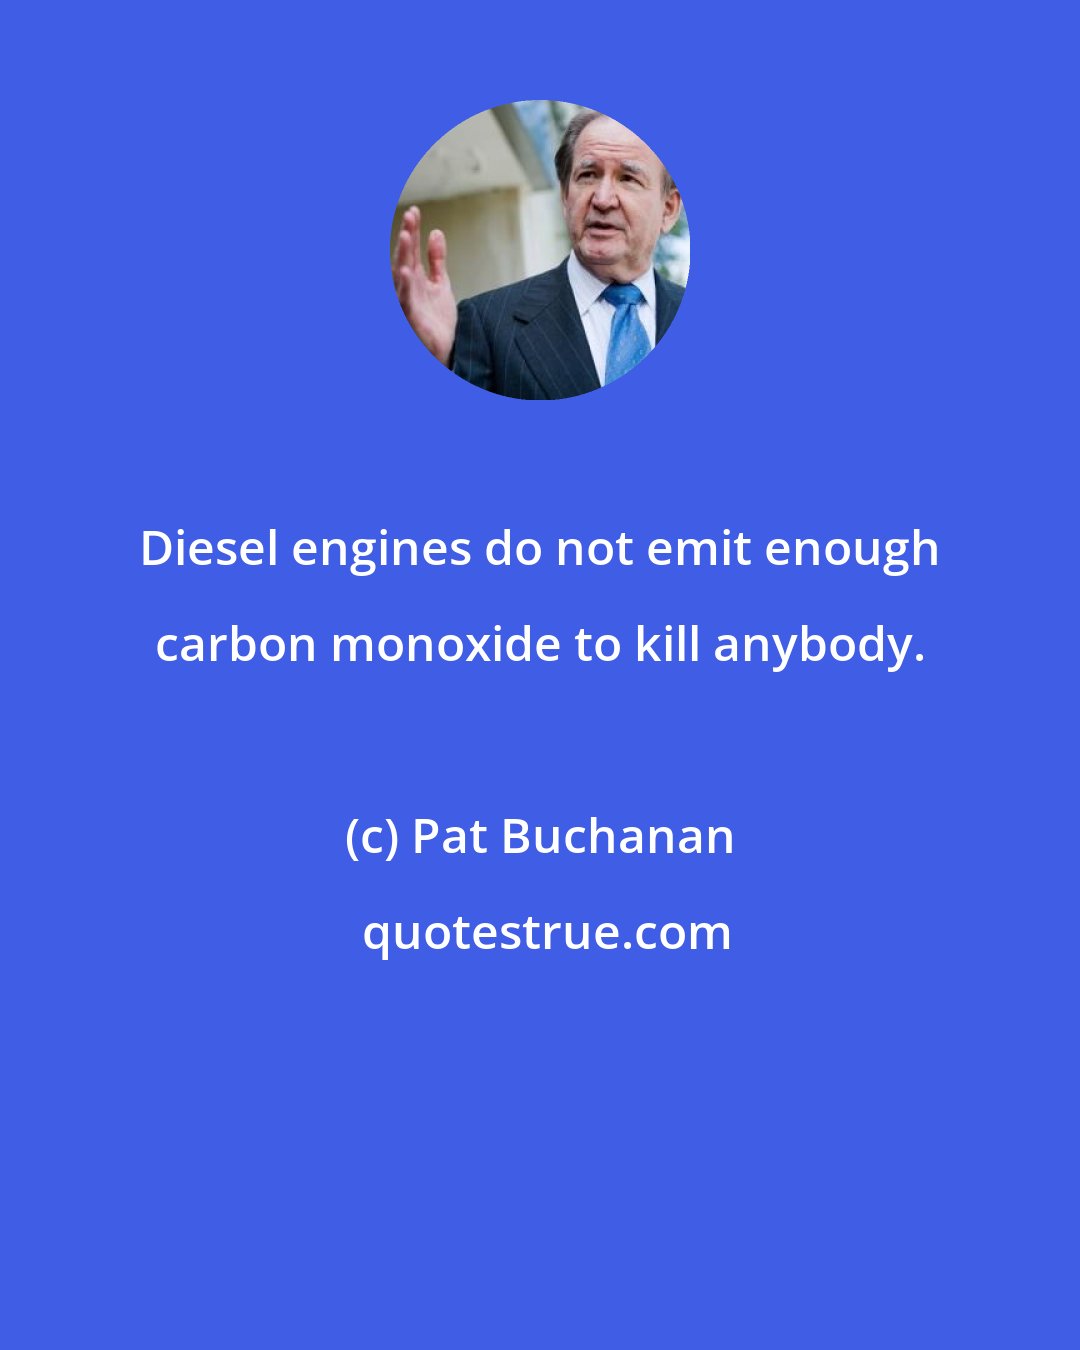 Pat Buchanan: Diesel engines do not emit enough carbon monoxide to kill anybody.